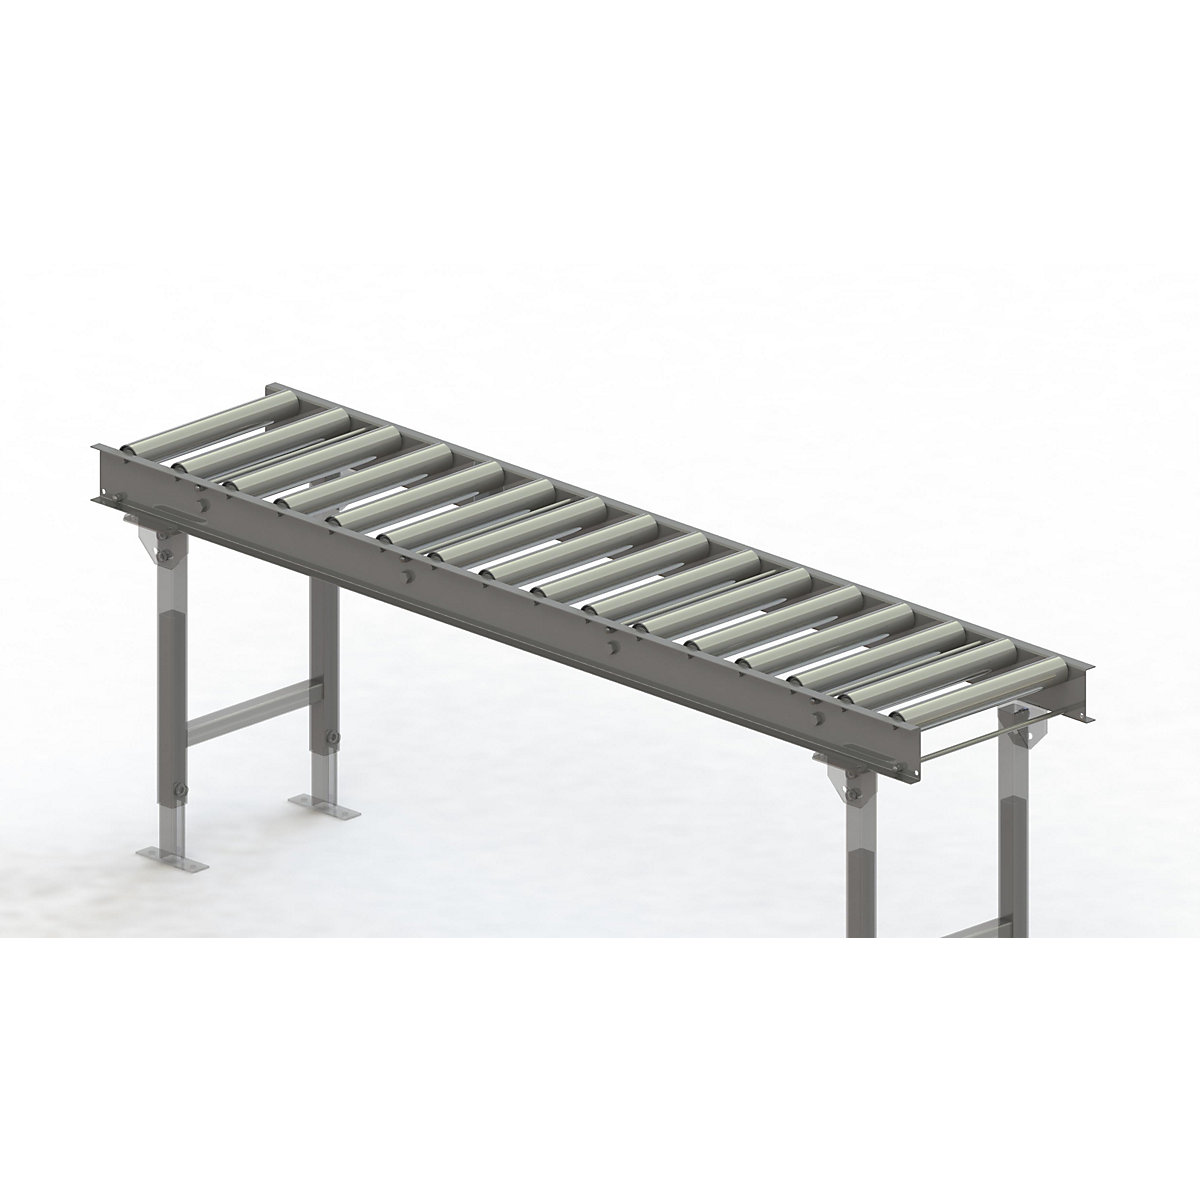 Gura – Roller conveyor, steel frame with zinc plated steel rollers, track width 400 mm, distance between axles 125 mm, length 2 m